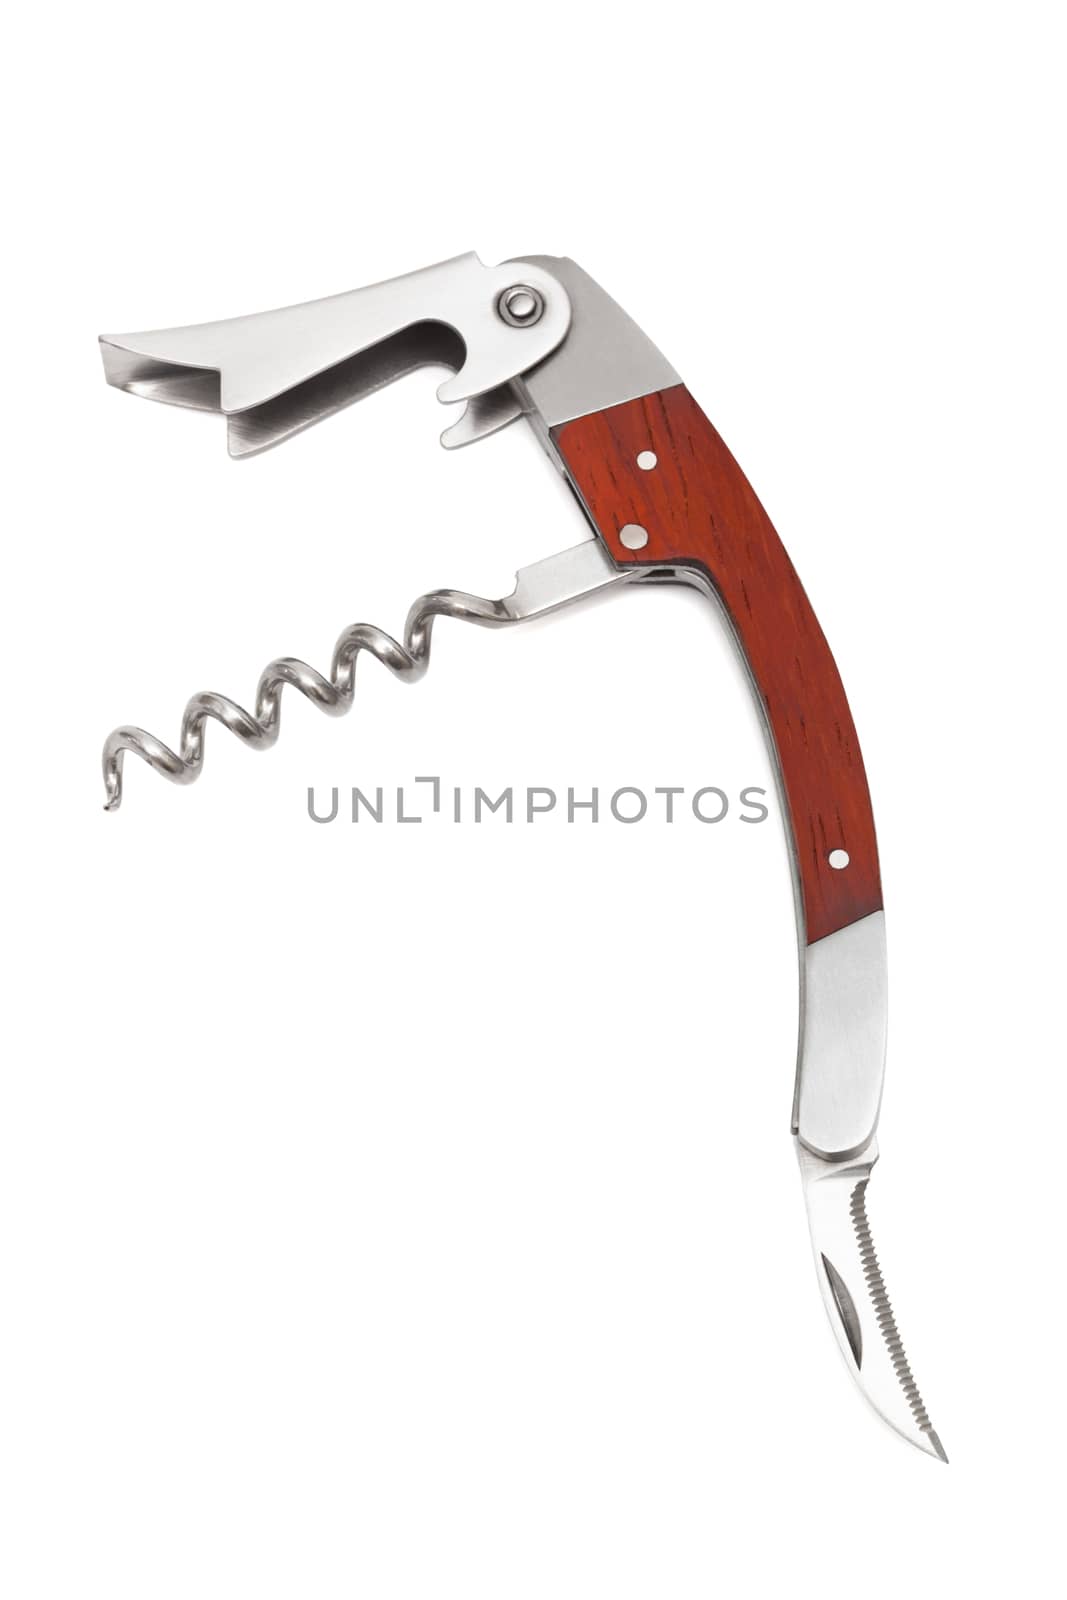 Modern metal corkscrew on a white background